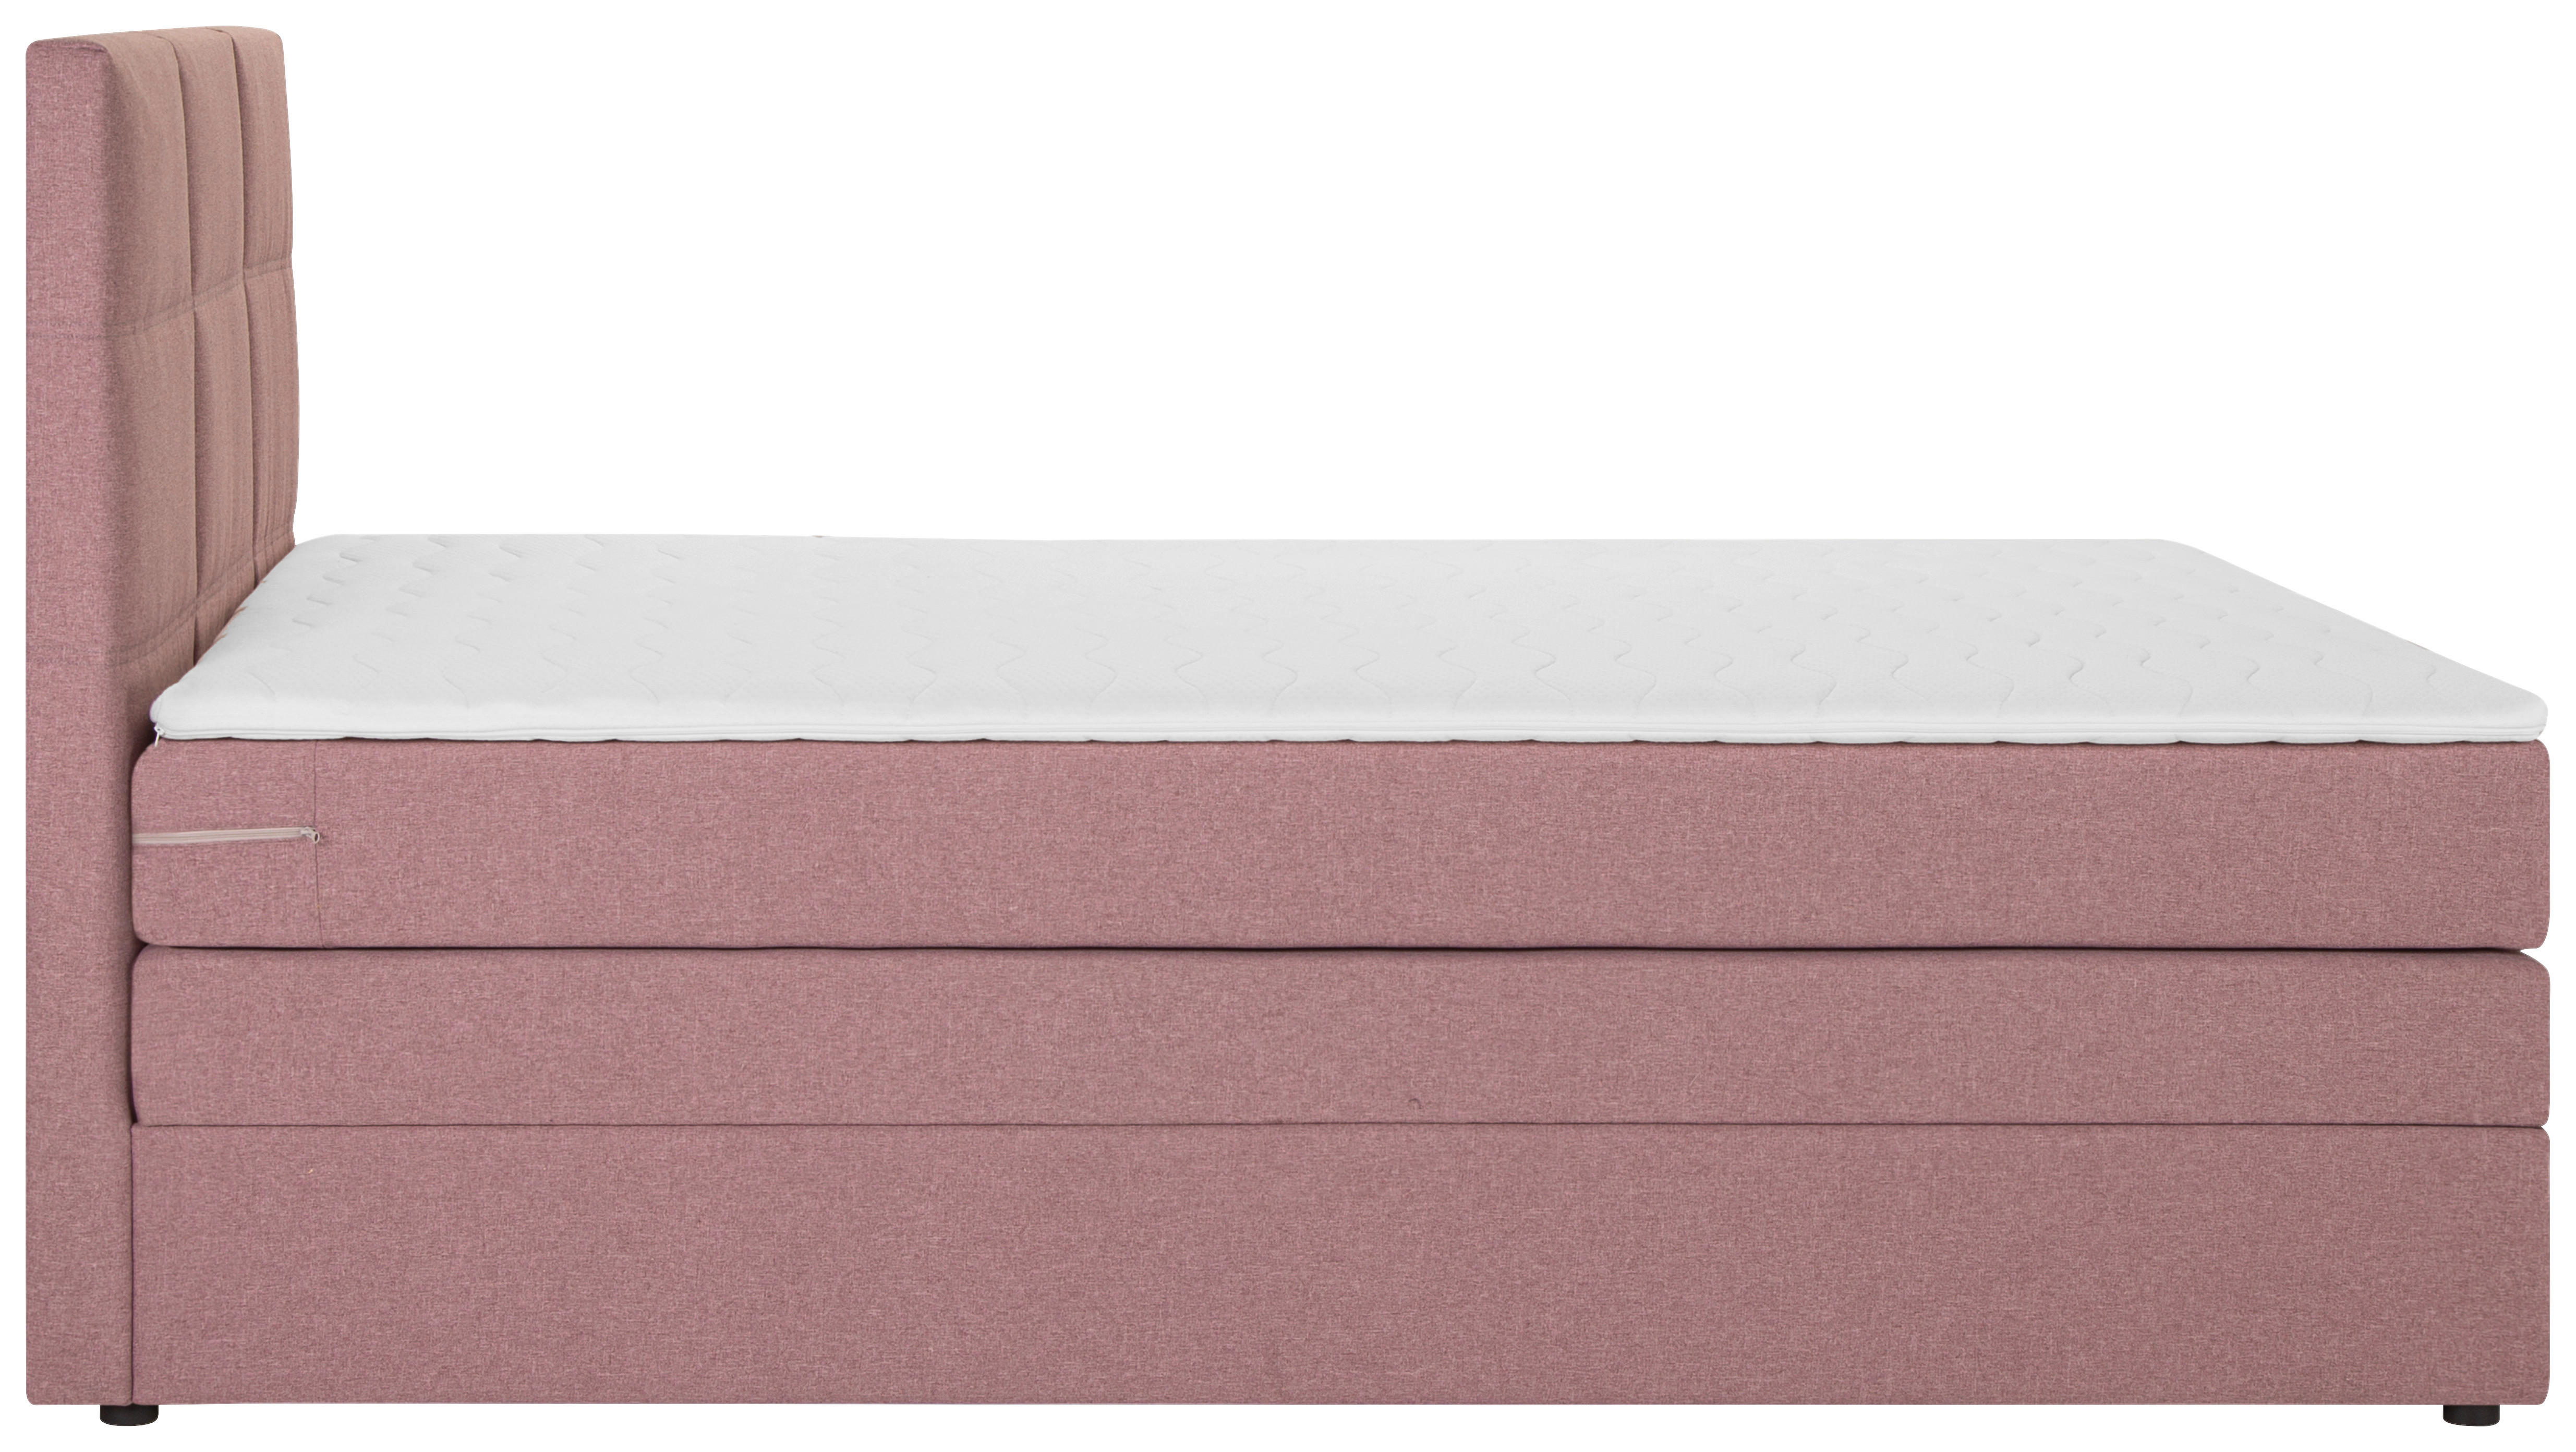 BOXSPRINGBETT 90/200 cm  in Altrosa  - Schwarz/Altrosa, Design, Kunststoff/Textil (90/200cm) - Welnova